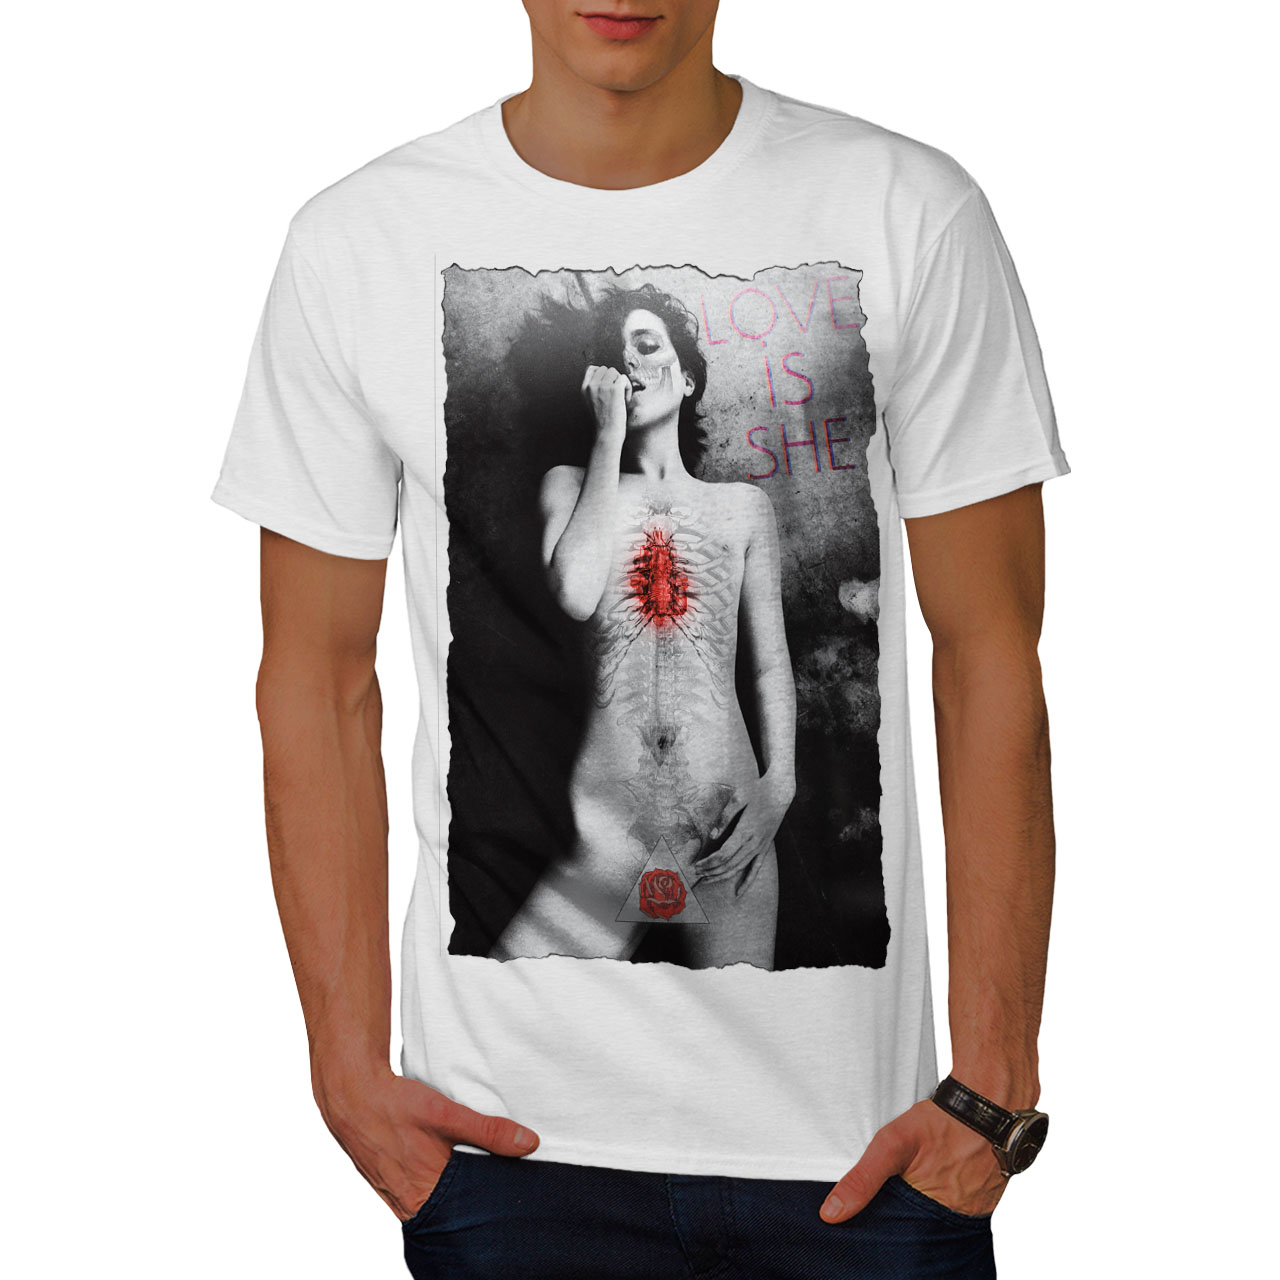 Wellcoda Girl Nude Love She Sexy Mens T-shirt, Naked Graphic Design Printed  Tee